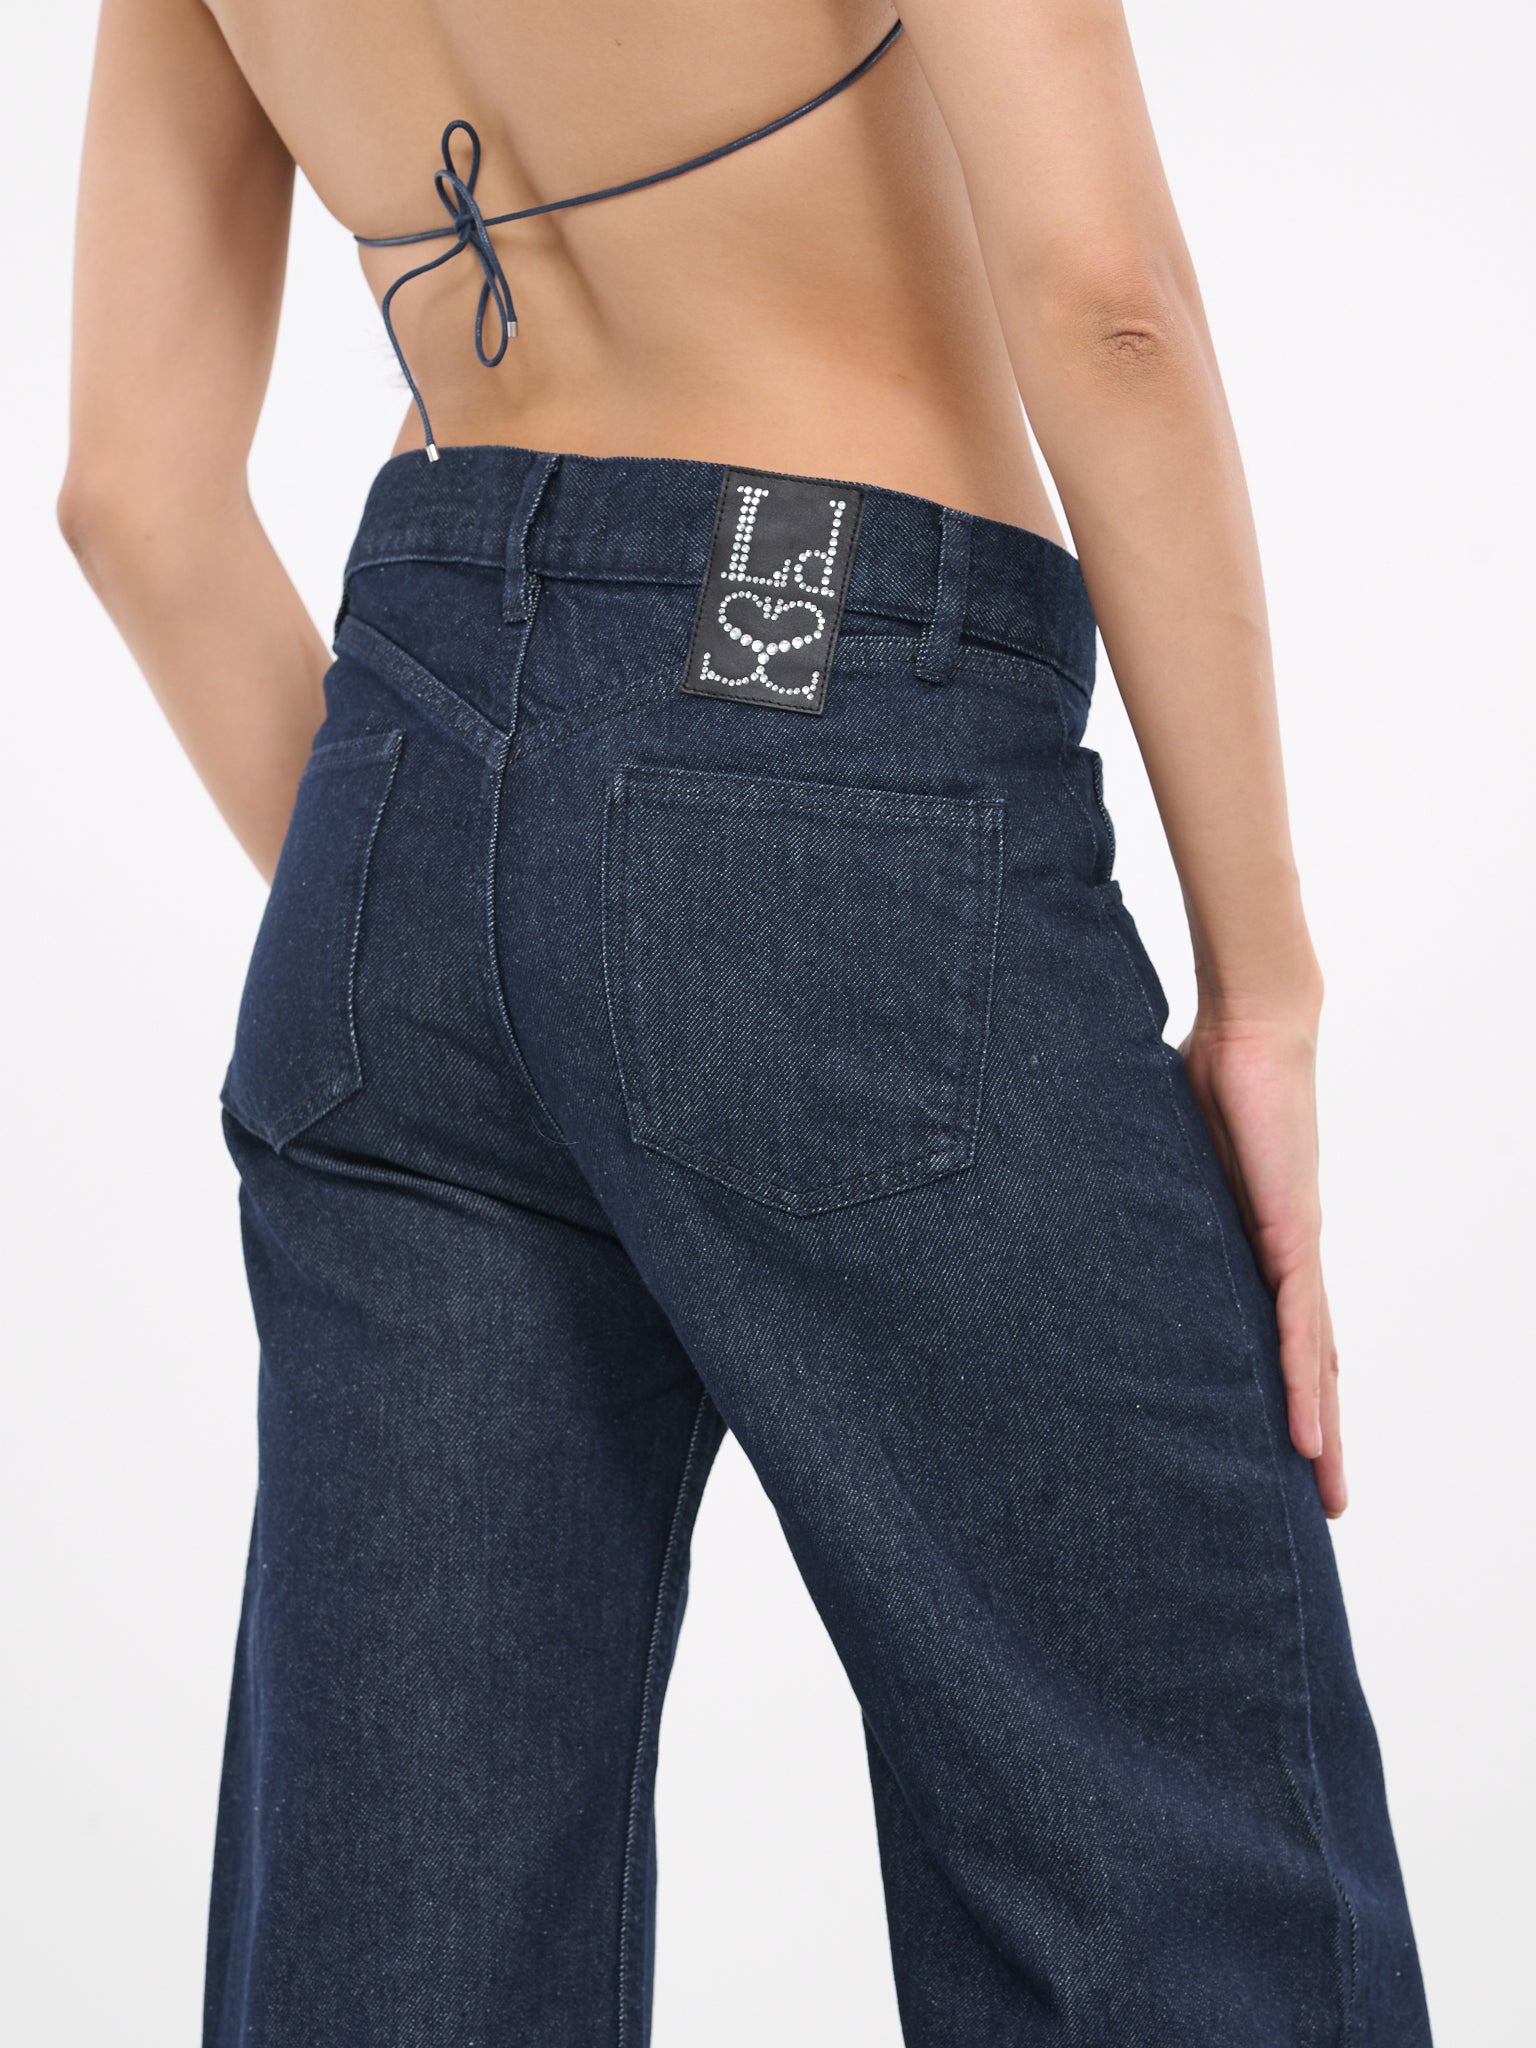 Lace-up Jeans (PT002UDEN001-INDIGO)